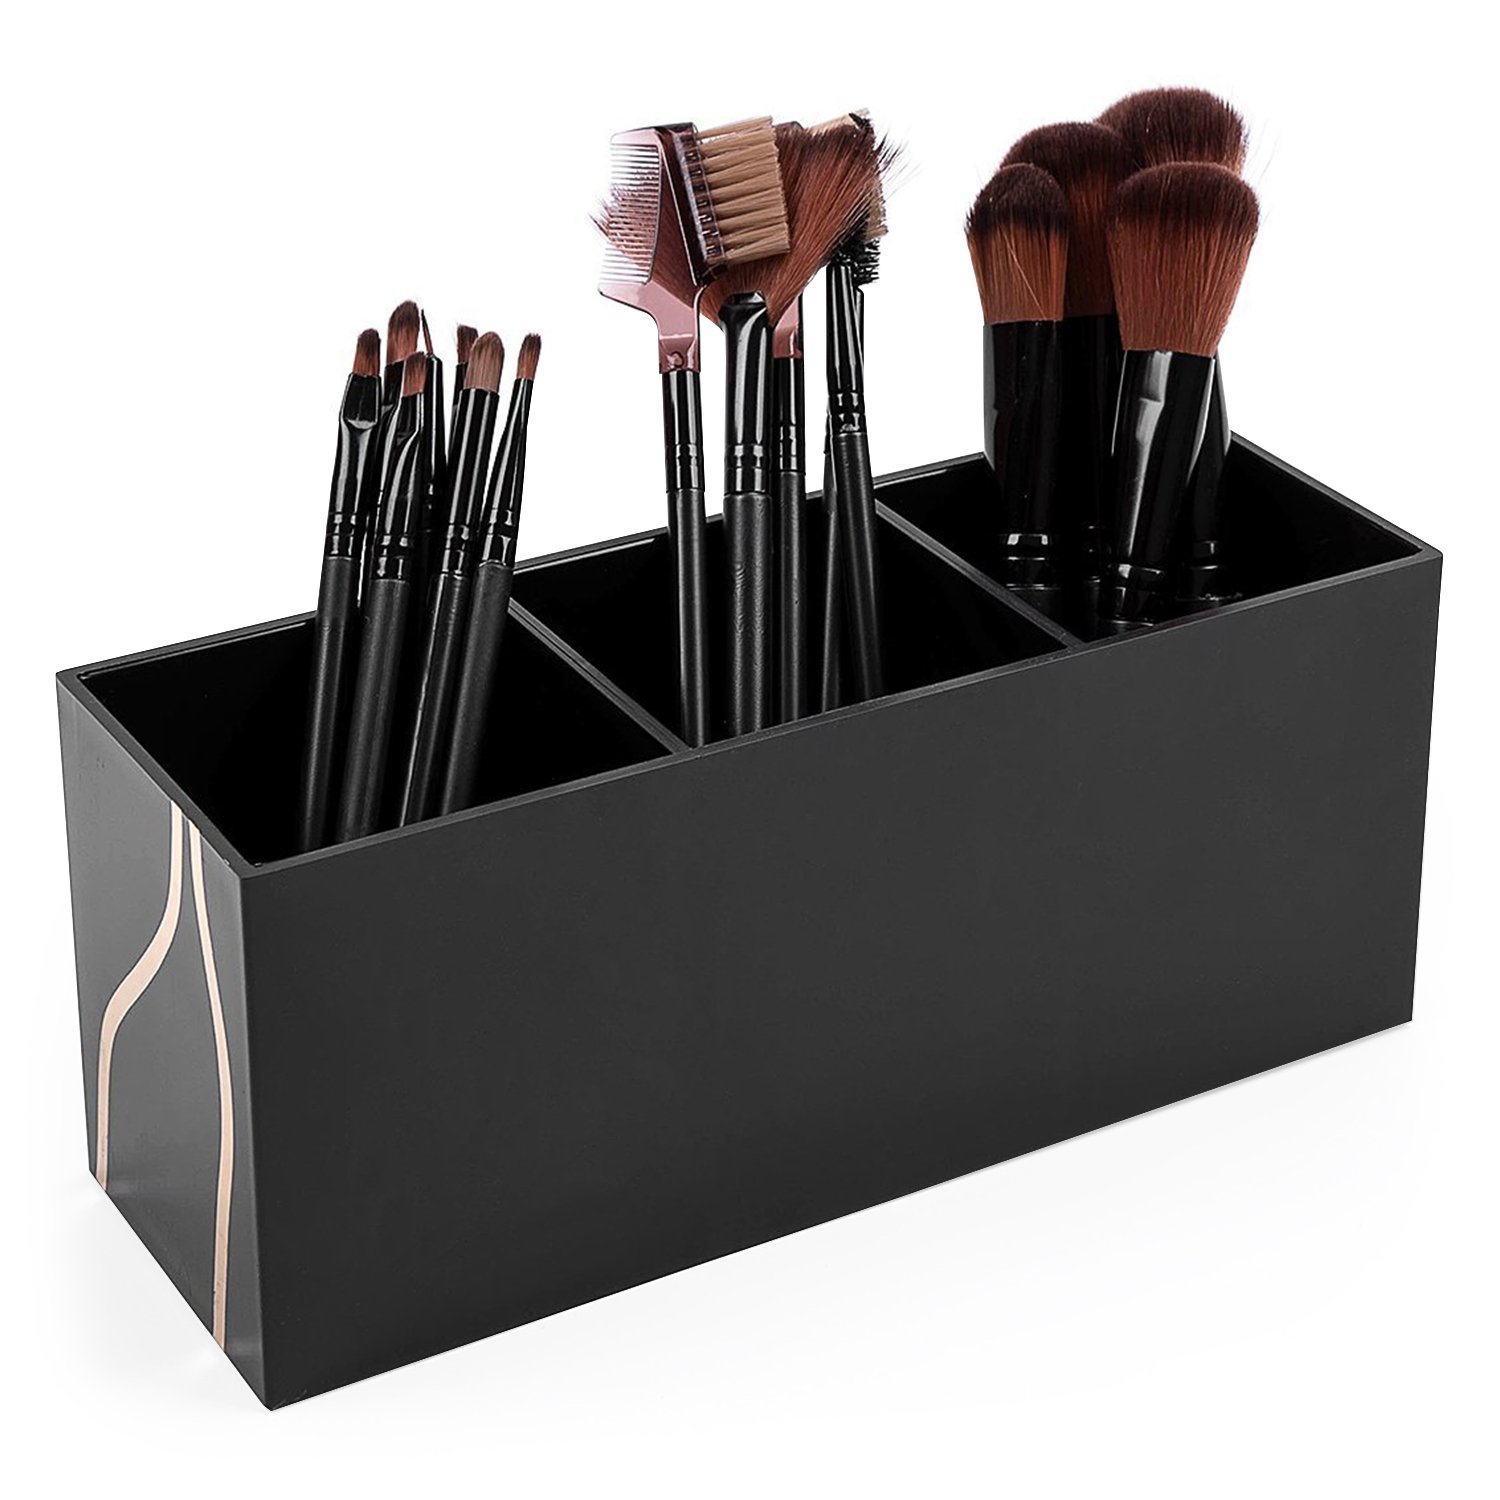 Vencer Makeup Brush Holder Organizer | 3 Slot Cosmetics Brushes Storage Solution,Black,VMO-011